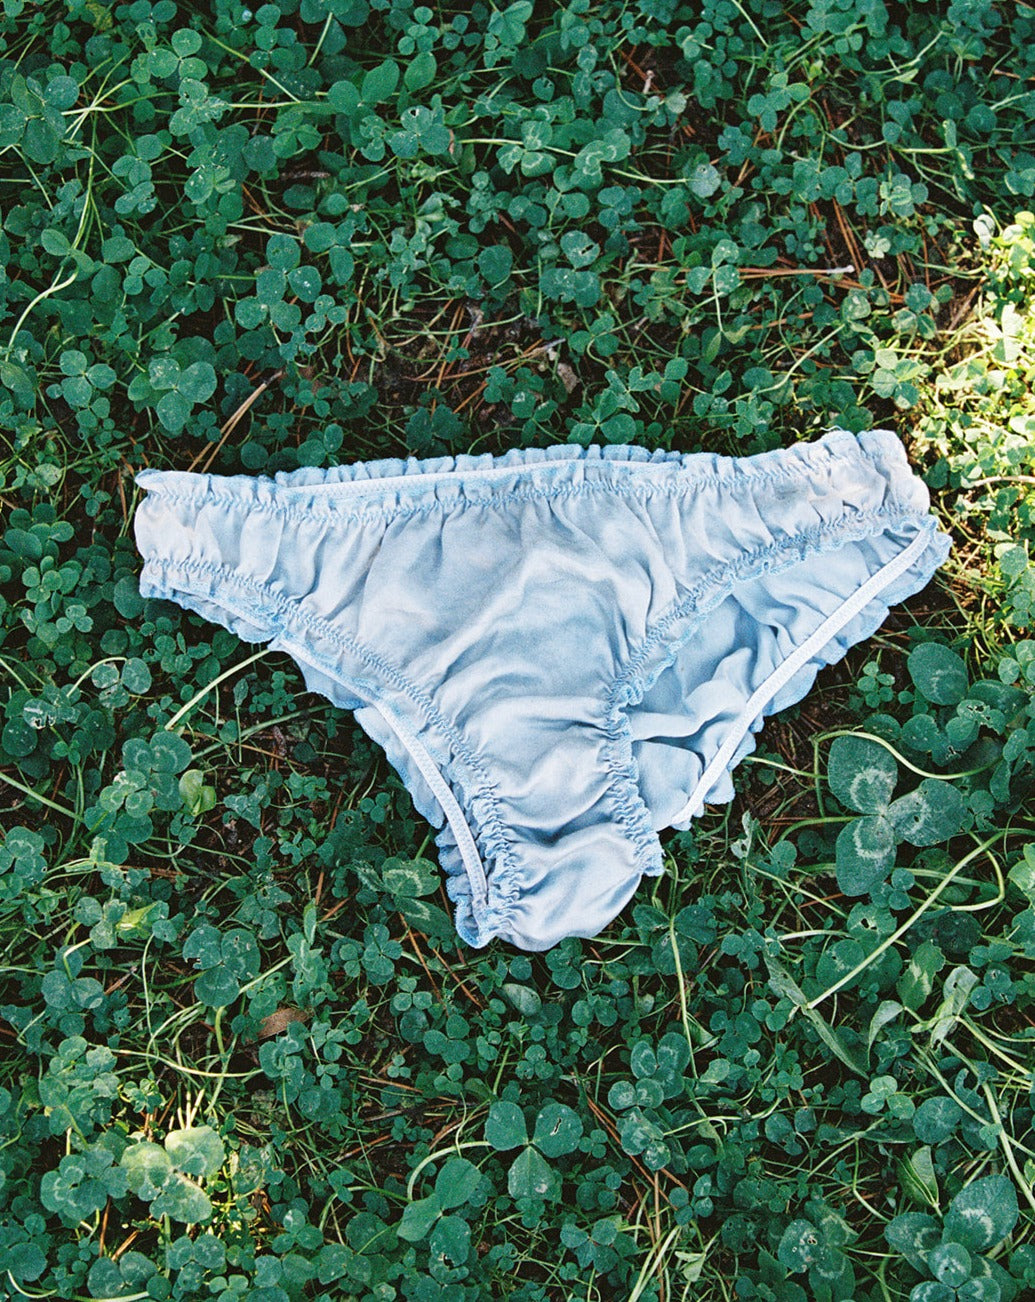 Indigo Blue Silk Woman's underwear lying in the grass